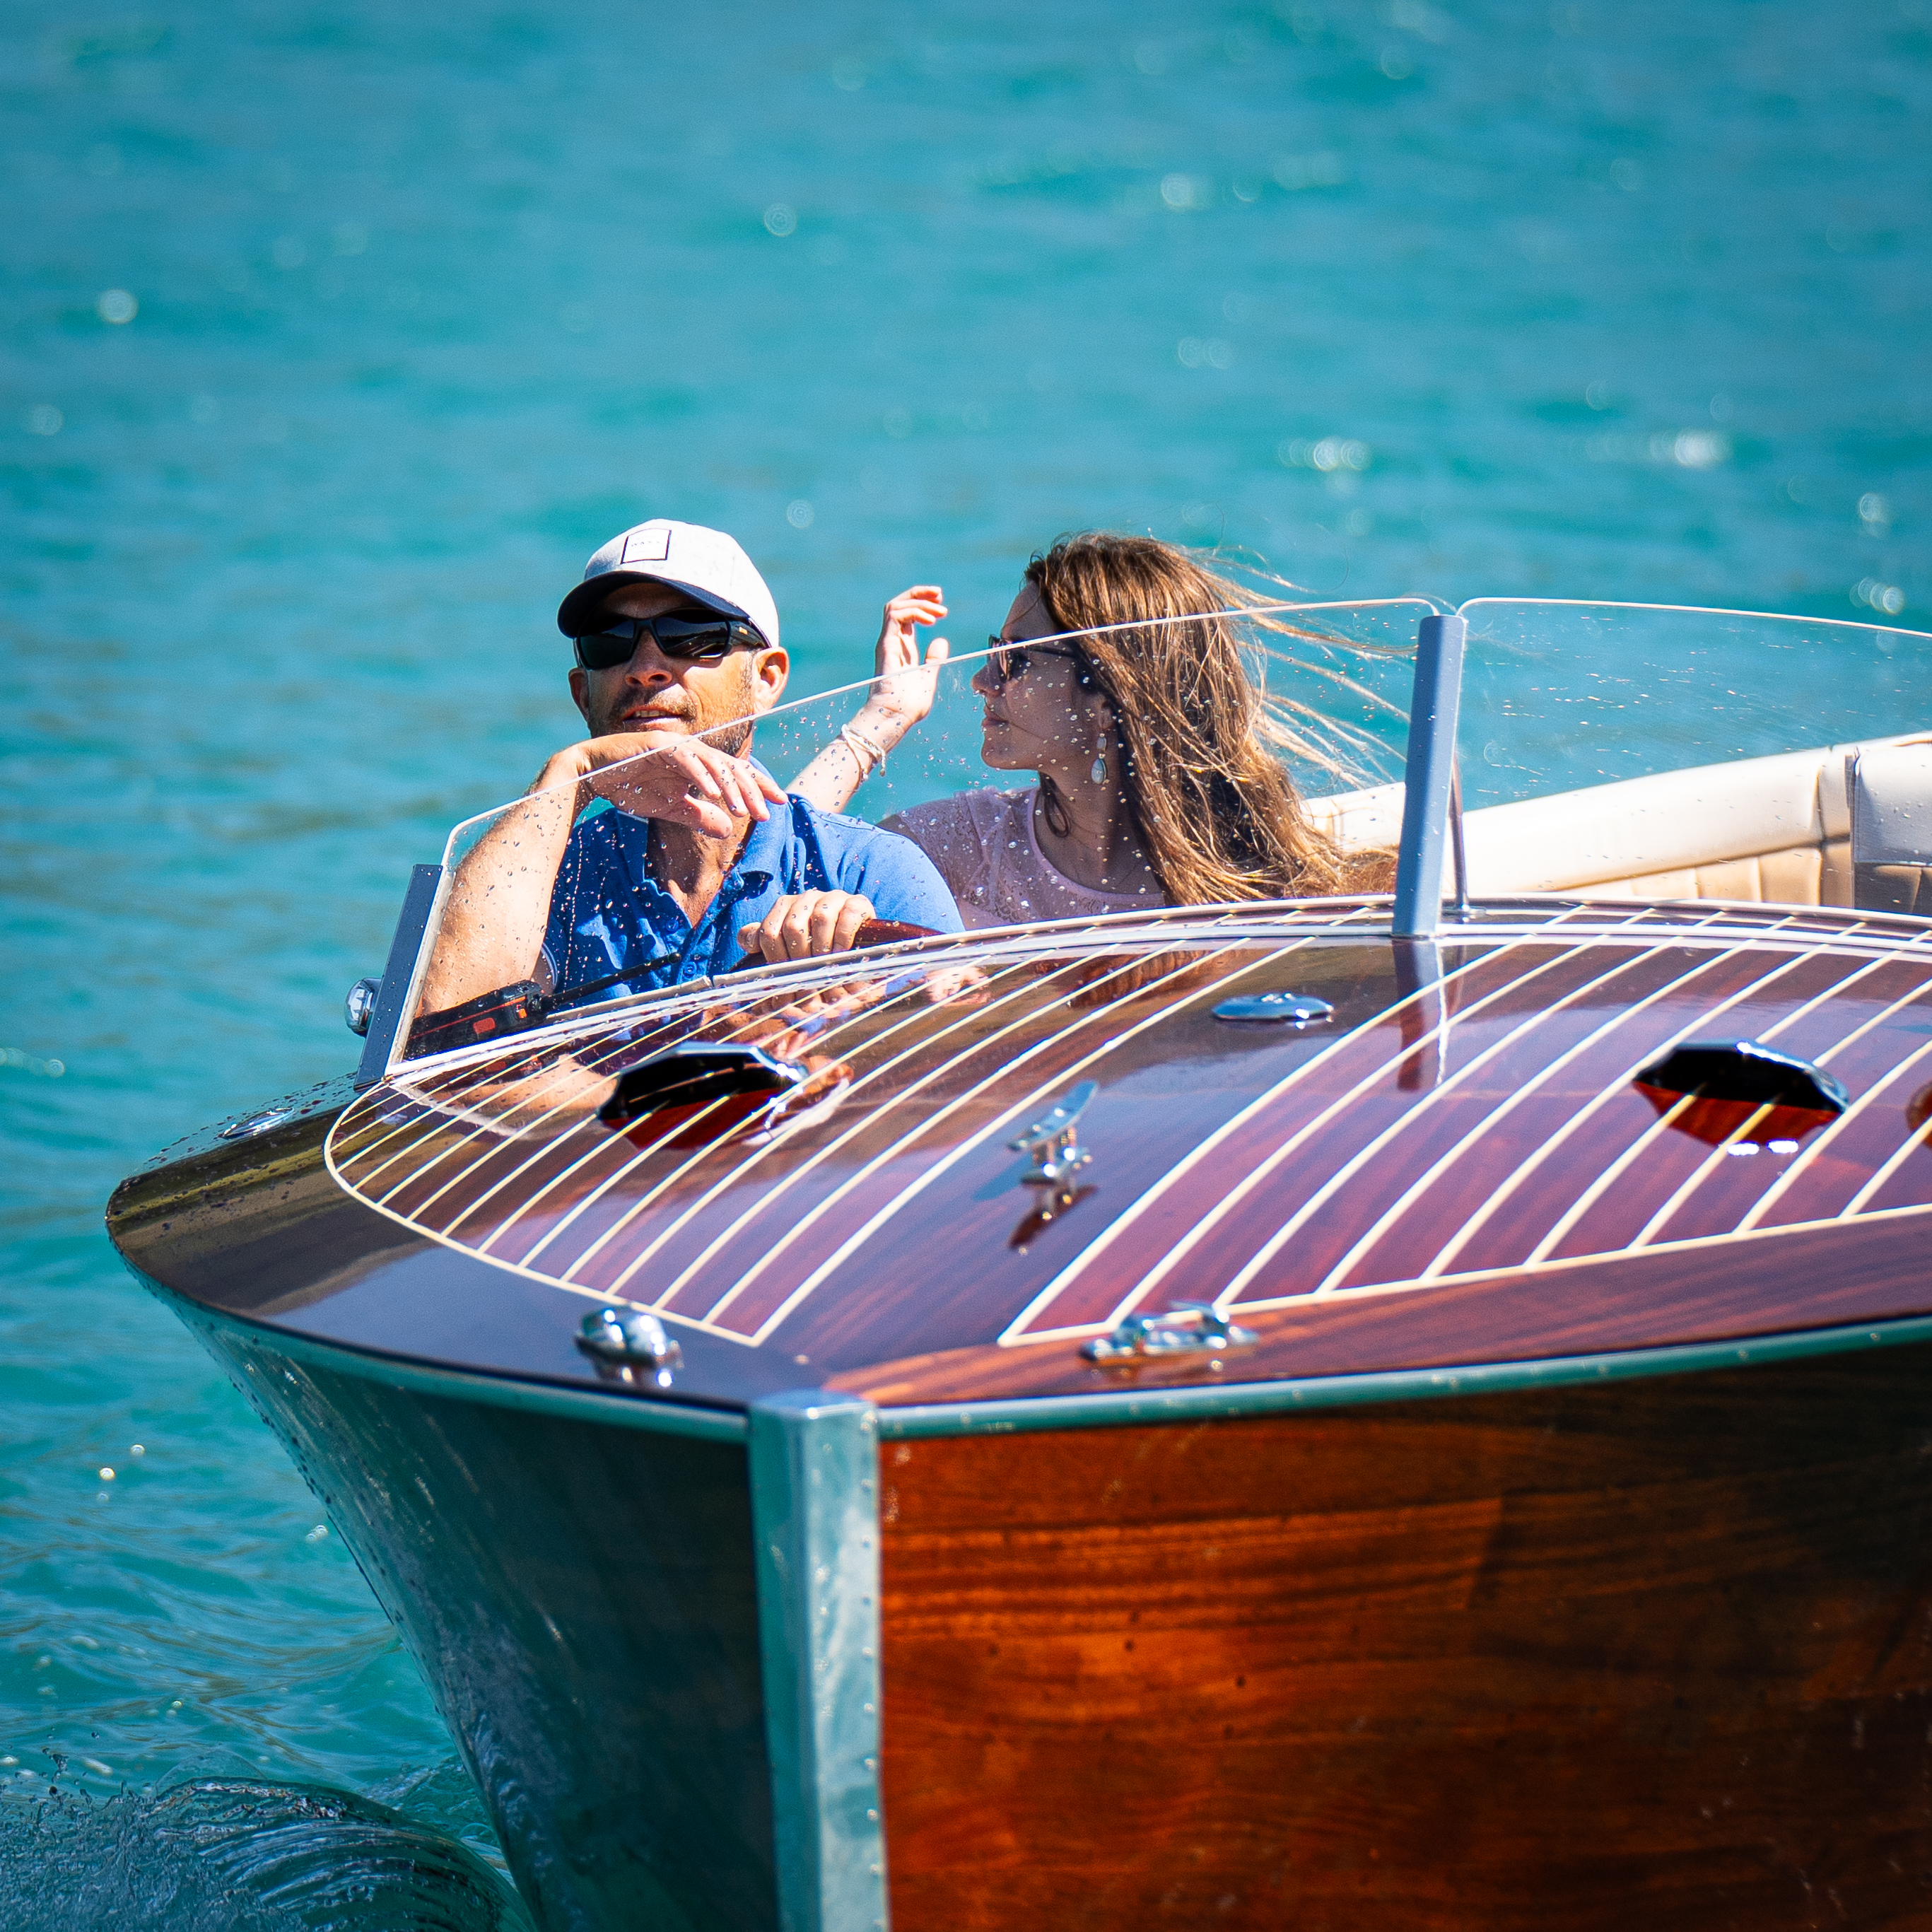 Serre Ponçon tour - Boat trip